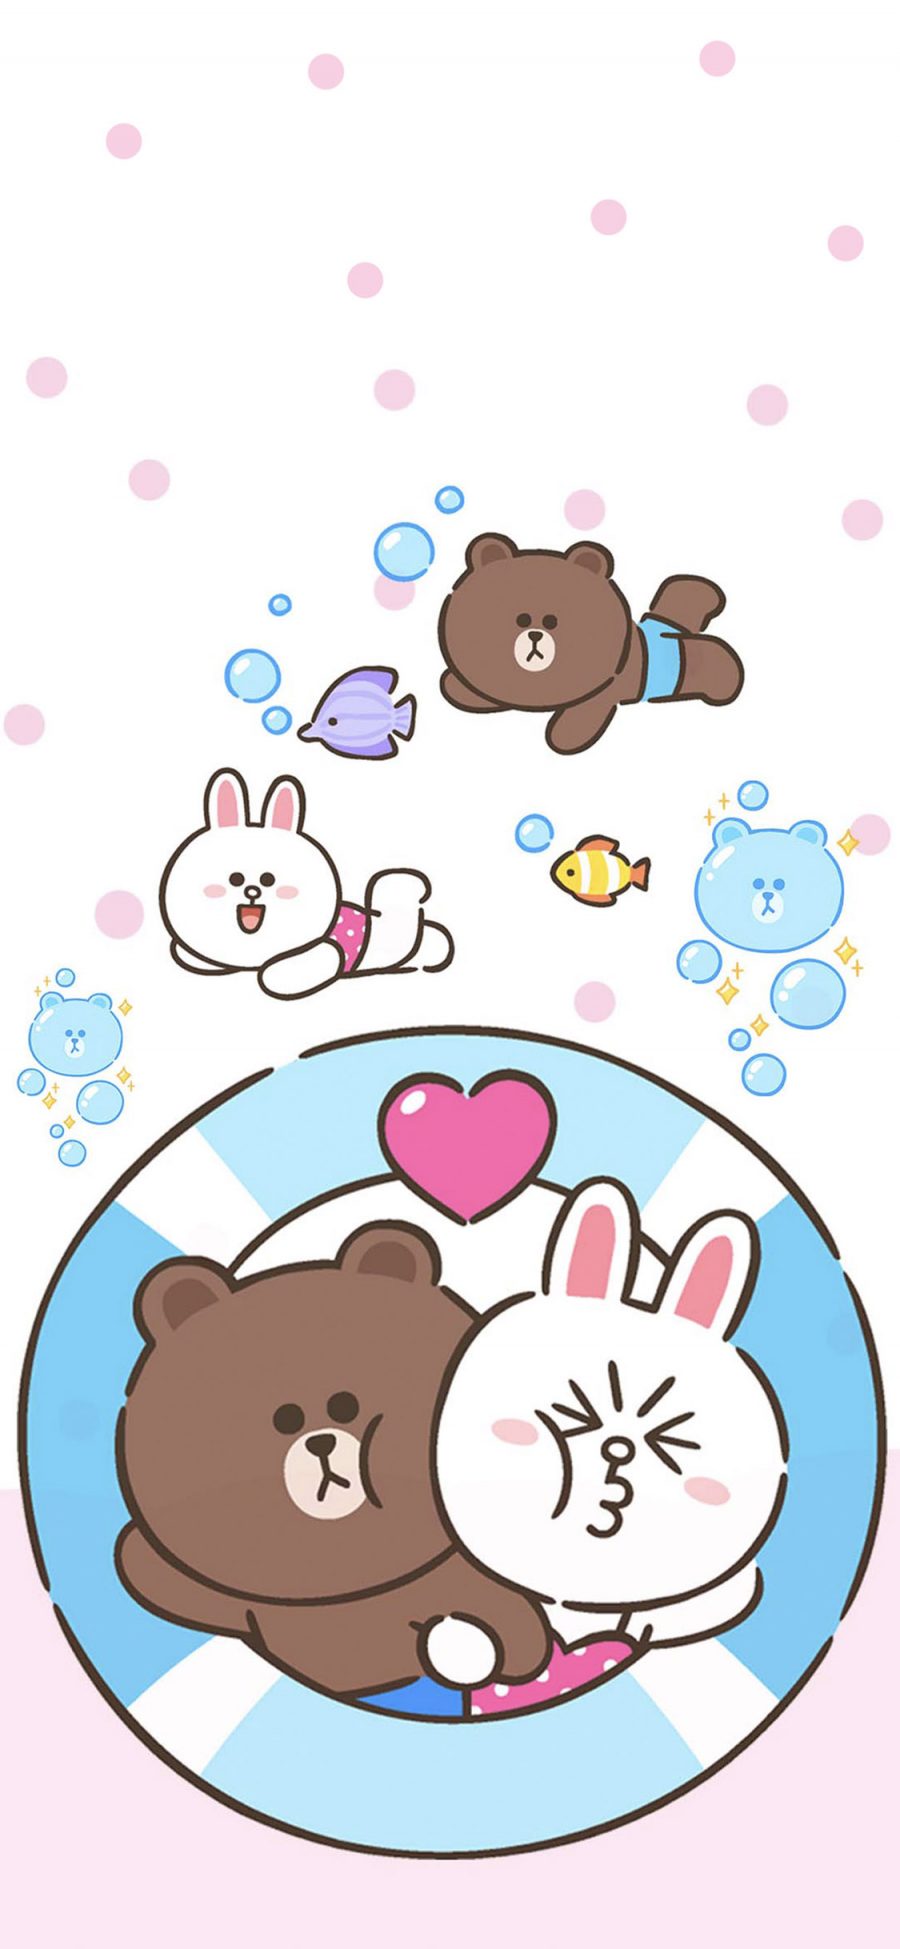 [2436×1125]linefriends 布朗熊 可妮兔 游泳 爱心 苹果手机动漫壁纸图片